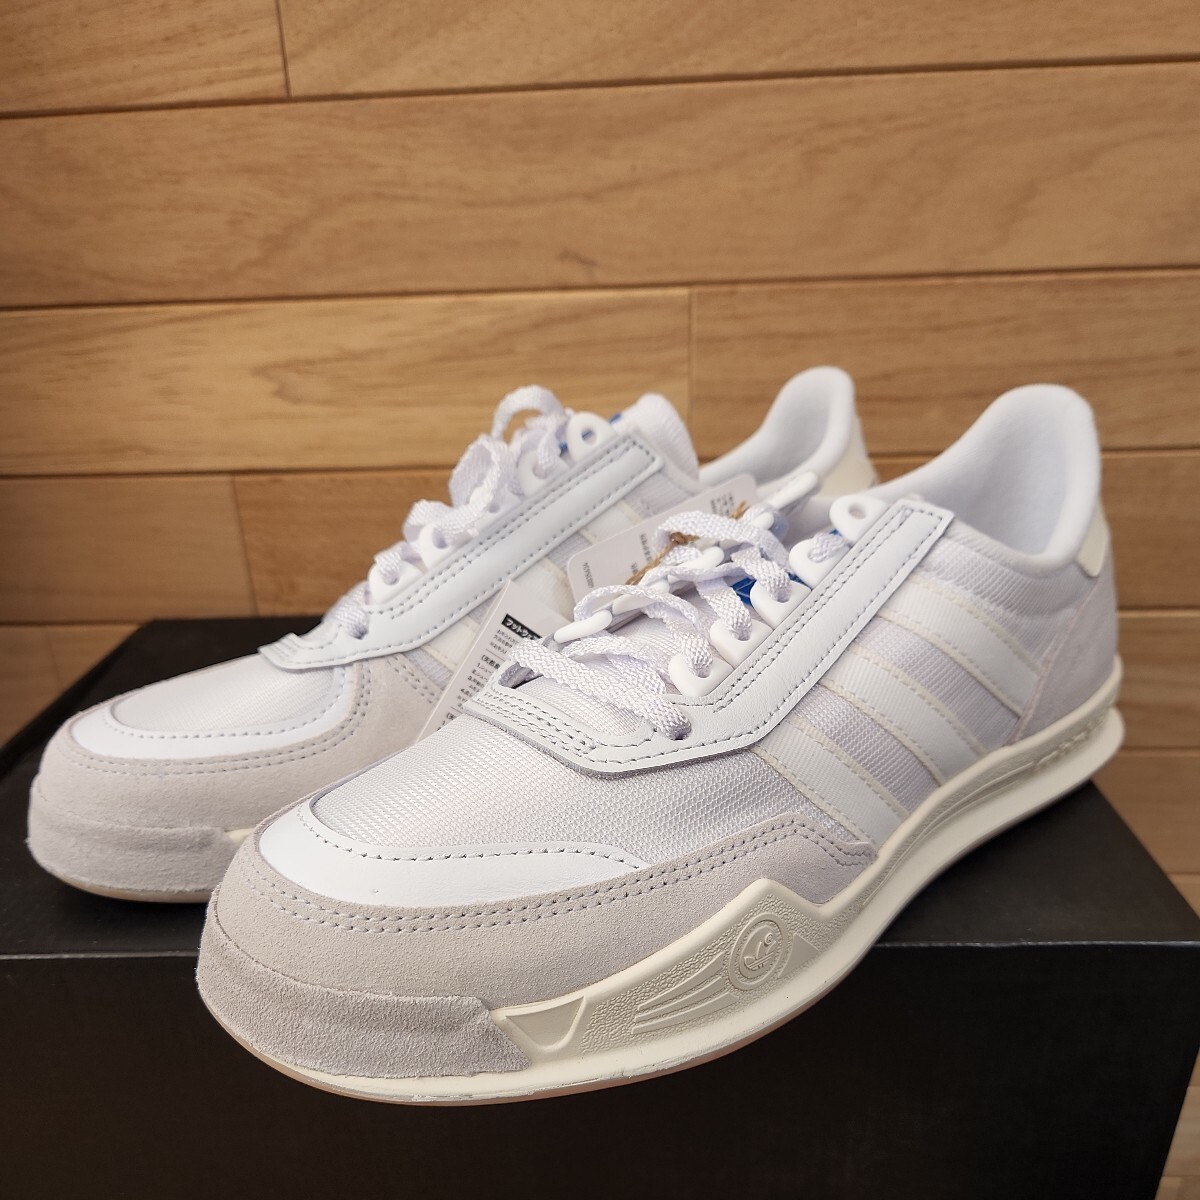 27cm new goods regular goods adidas Originals Adidas Originals CT86 sneakers shoes suede Mix popular white 